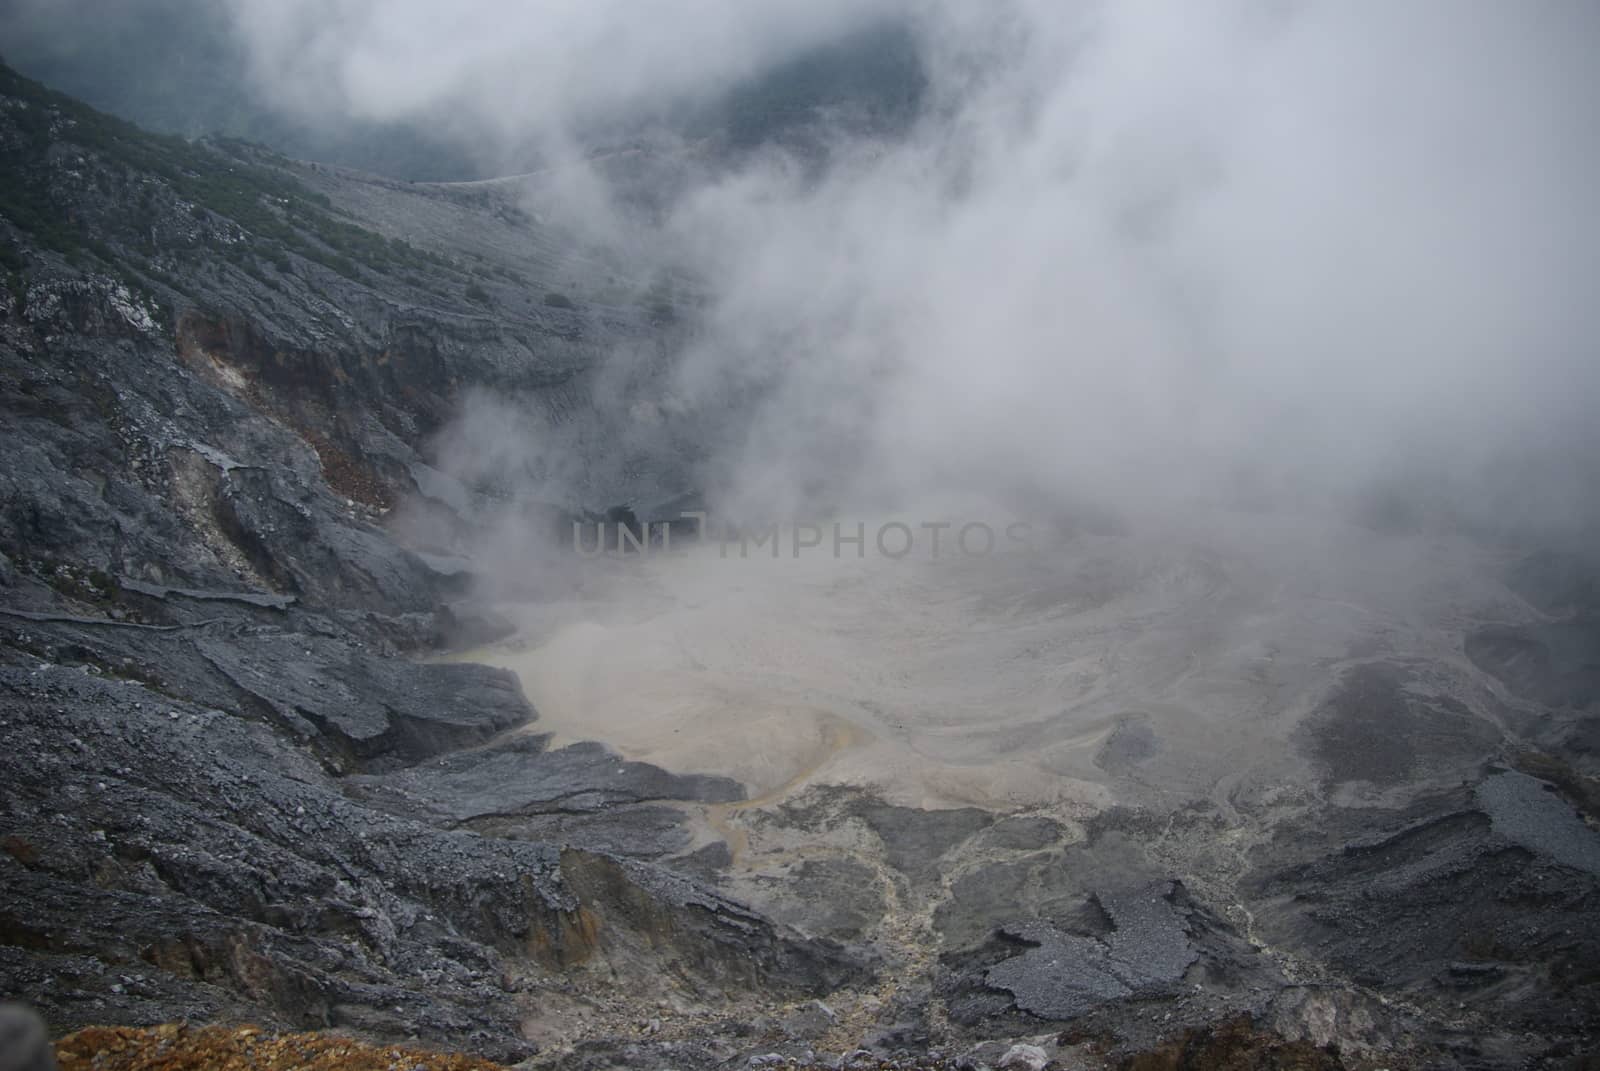 The crater of Tangkuban Perahu in Bandung, Indonesia by craigansibin